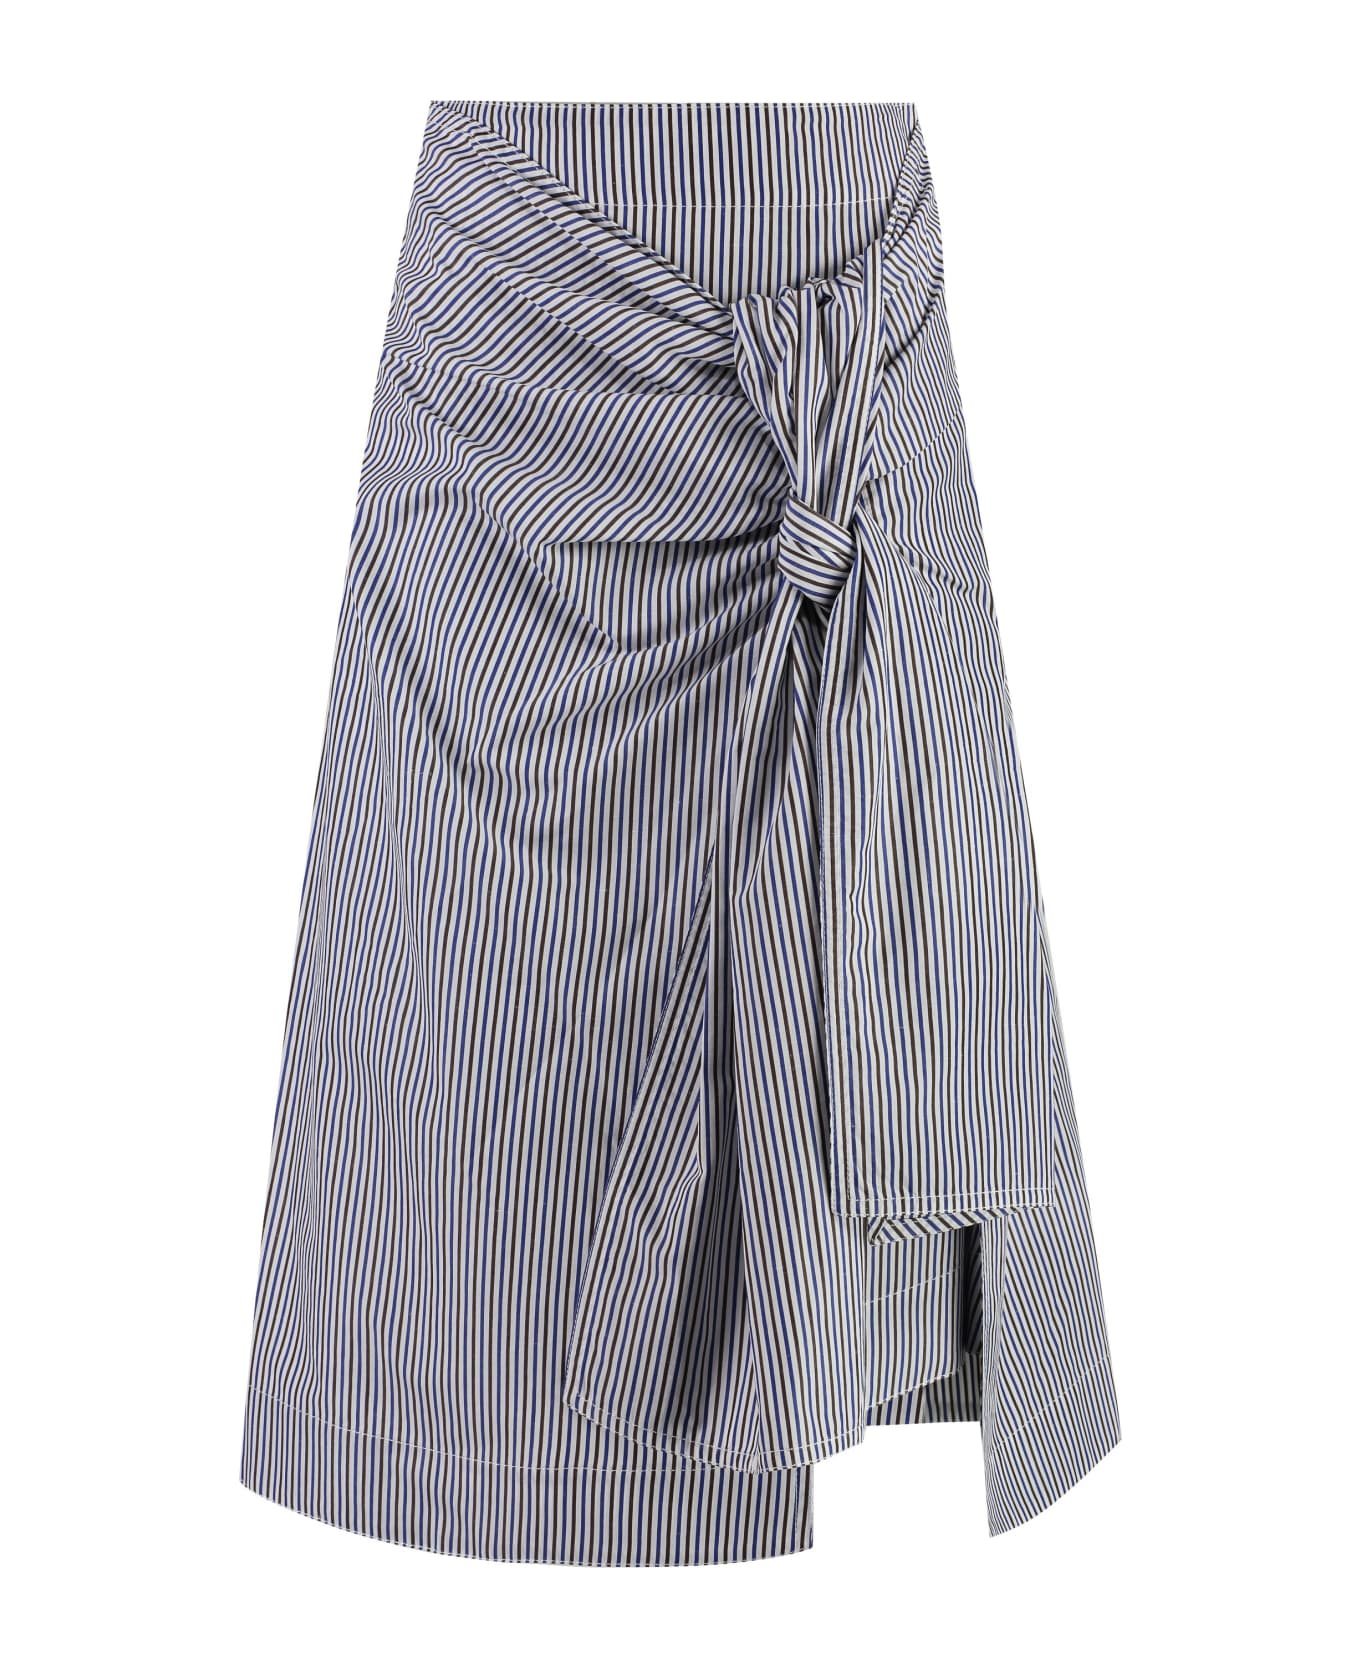 Bottega Veneta Cotton And Linen Skirt - Multicolor スカート